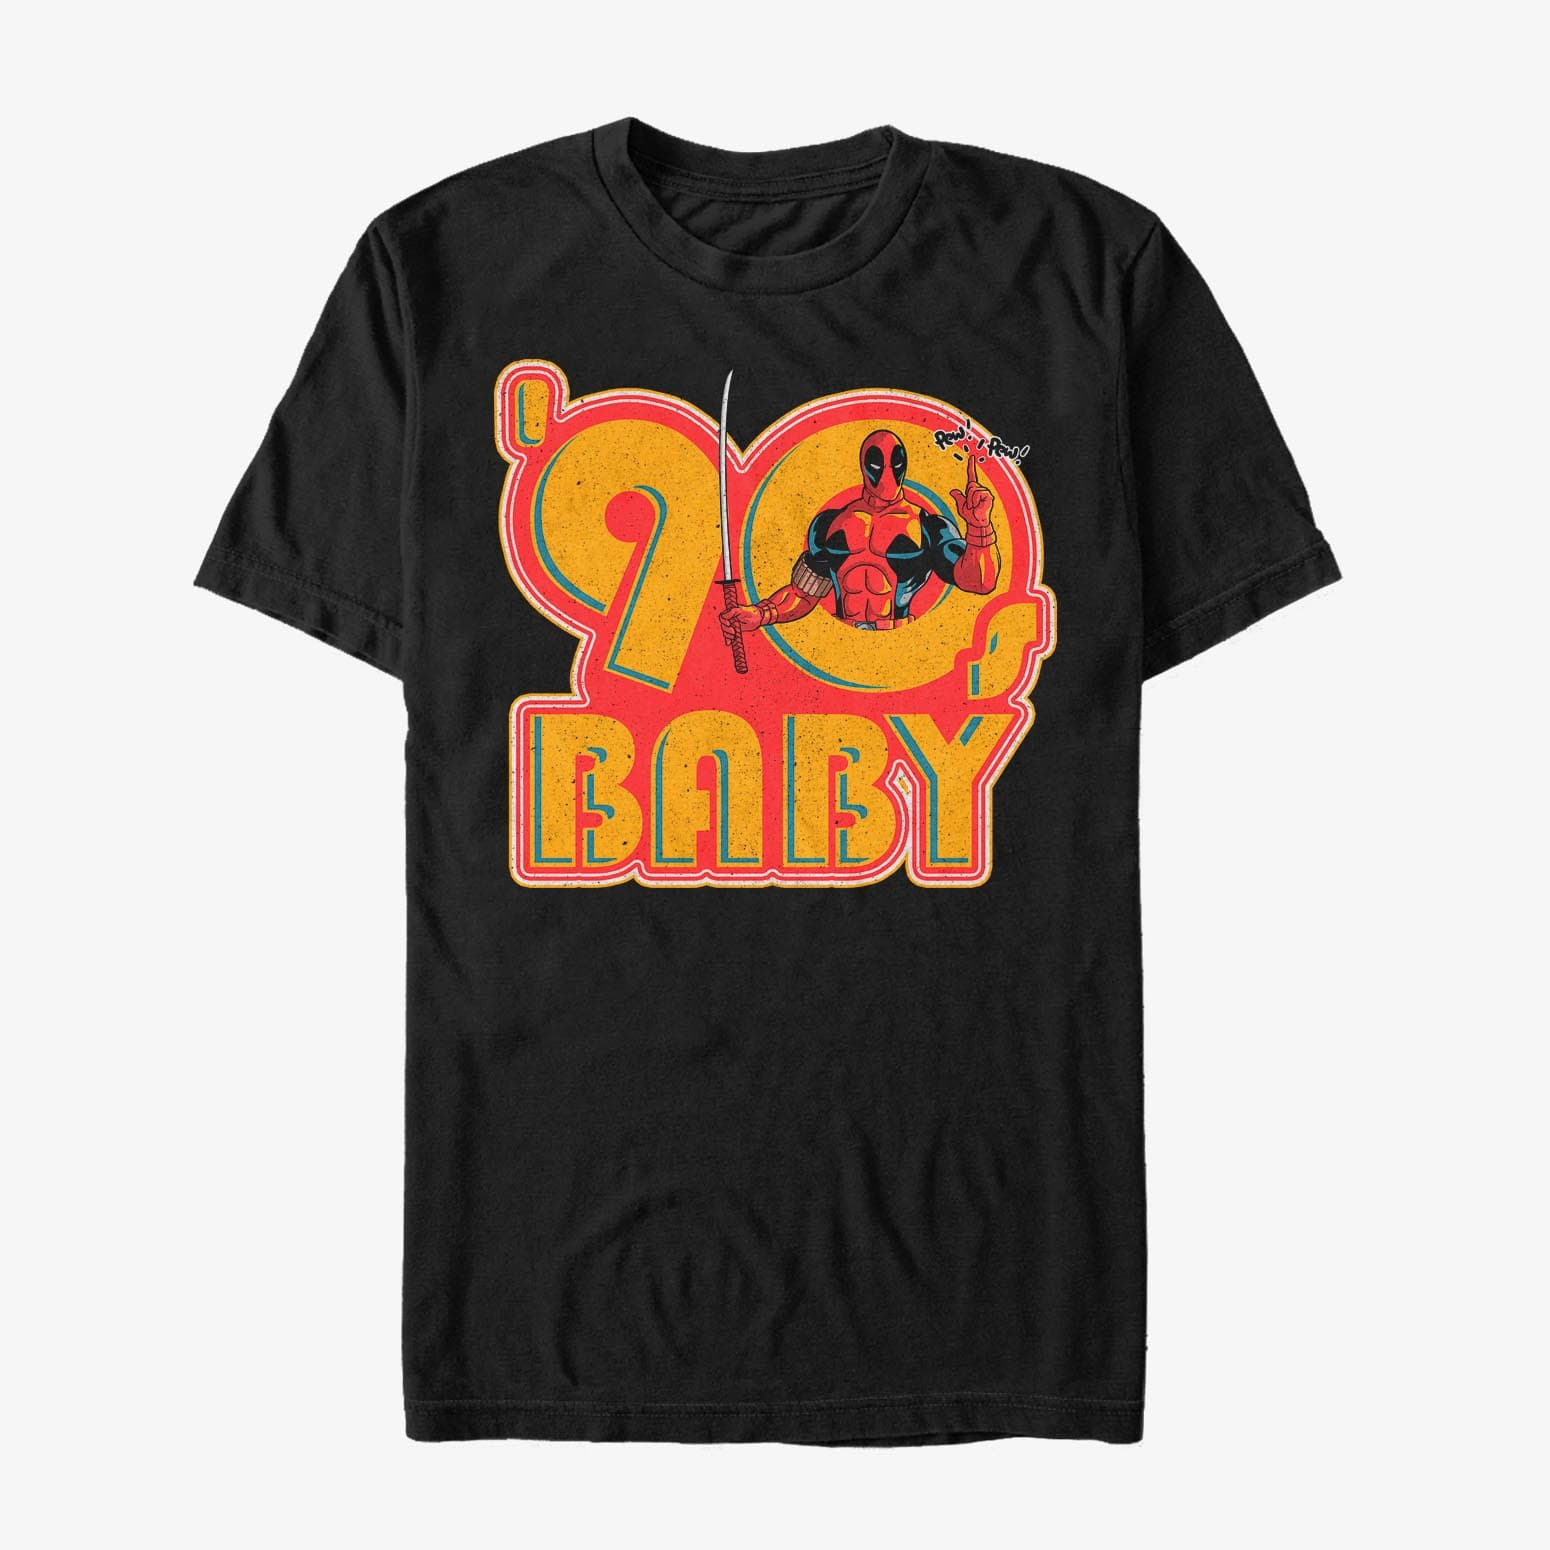 T-shirts Merch Marvel Deadpool - 90's Baby Black